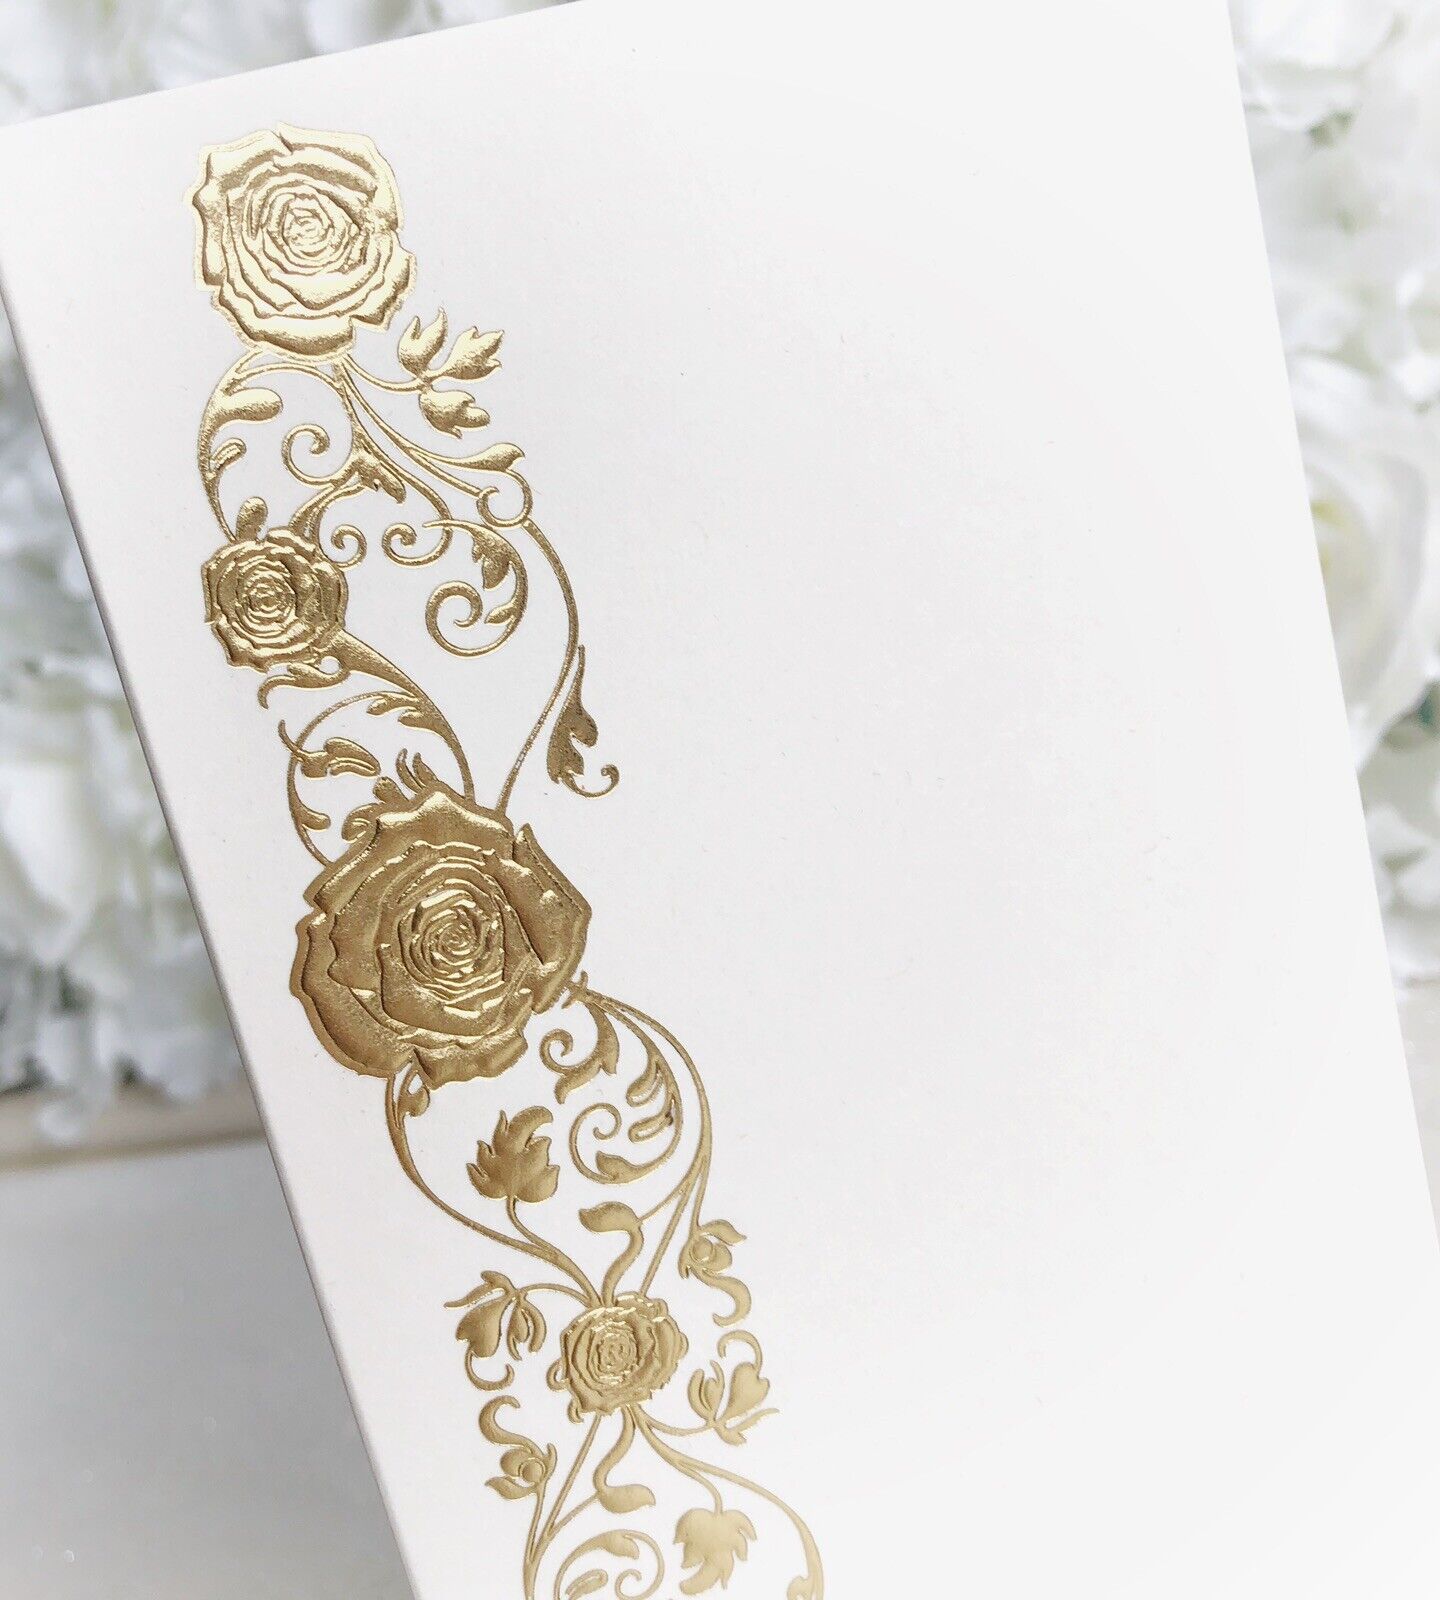 10 DL Luxury Gold Foiled Rose Ivory Wedding / Party Card Craft Blanks Envelopes